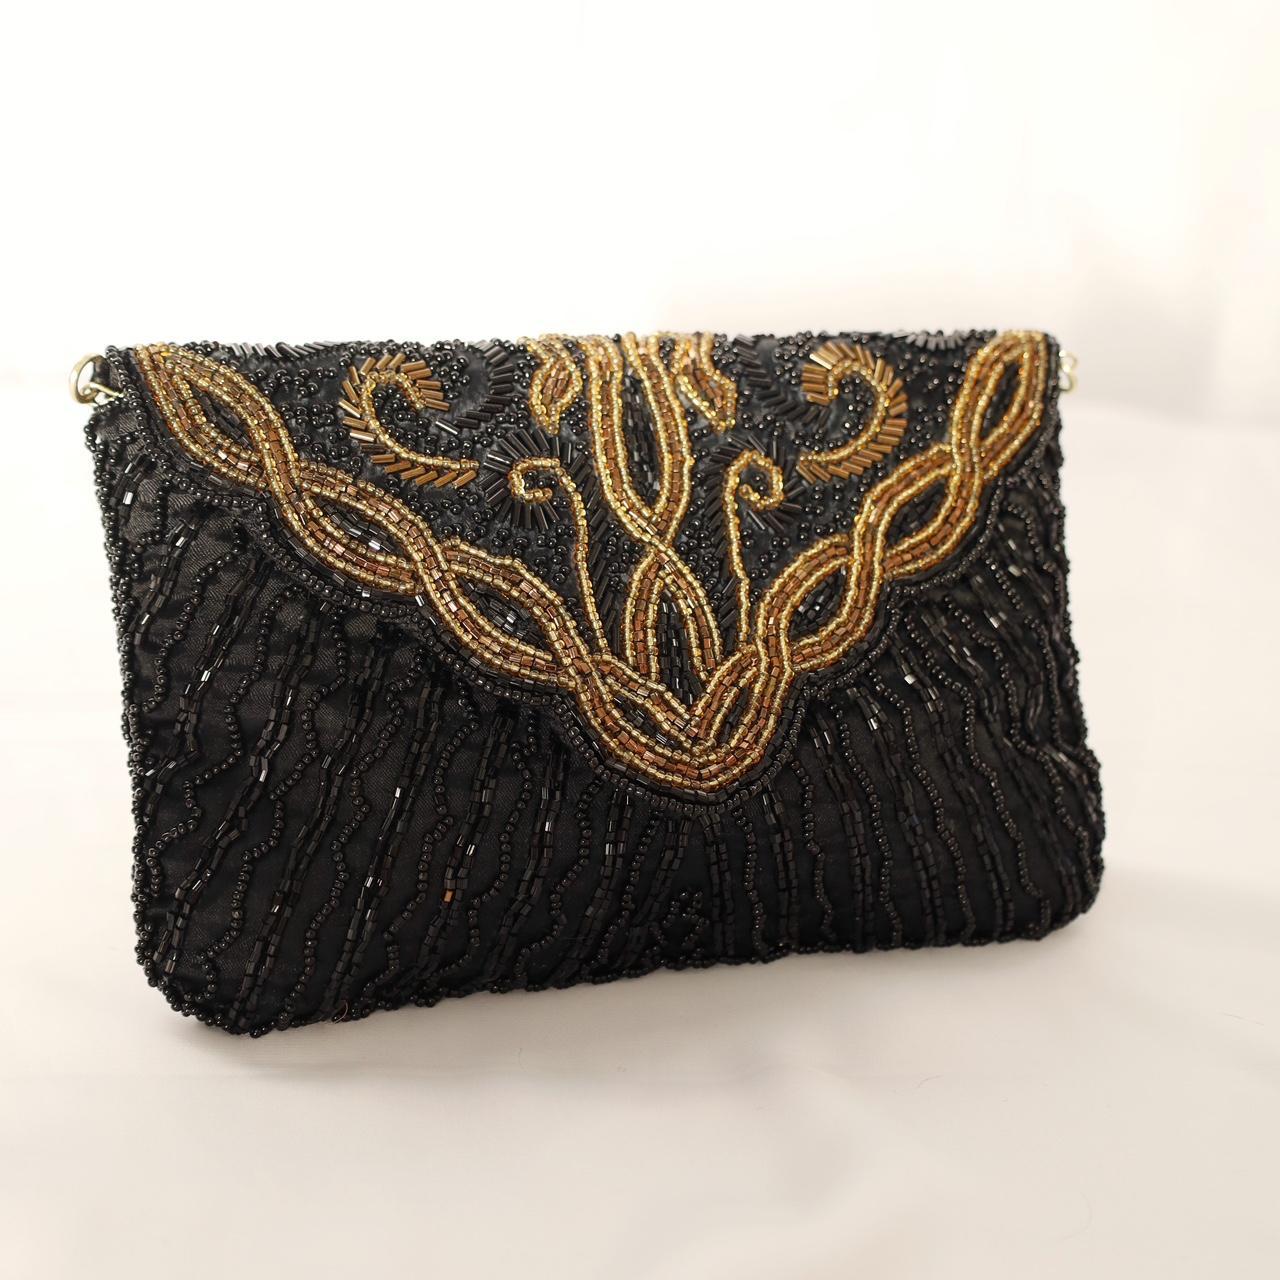 Black & Gold Beaded Evening Bag with Gold Strap Vintage